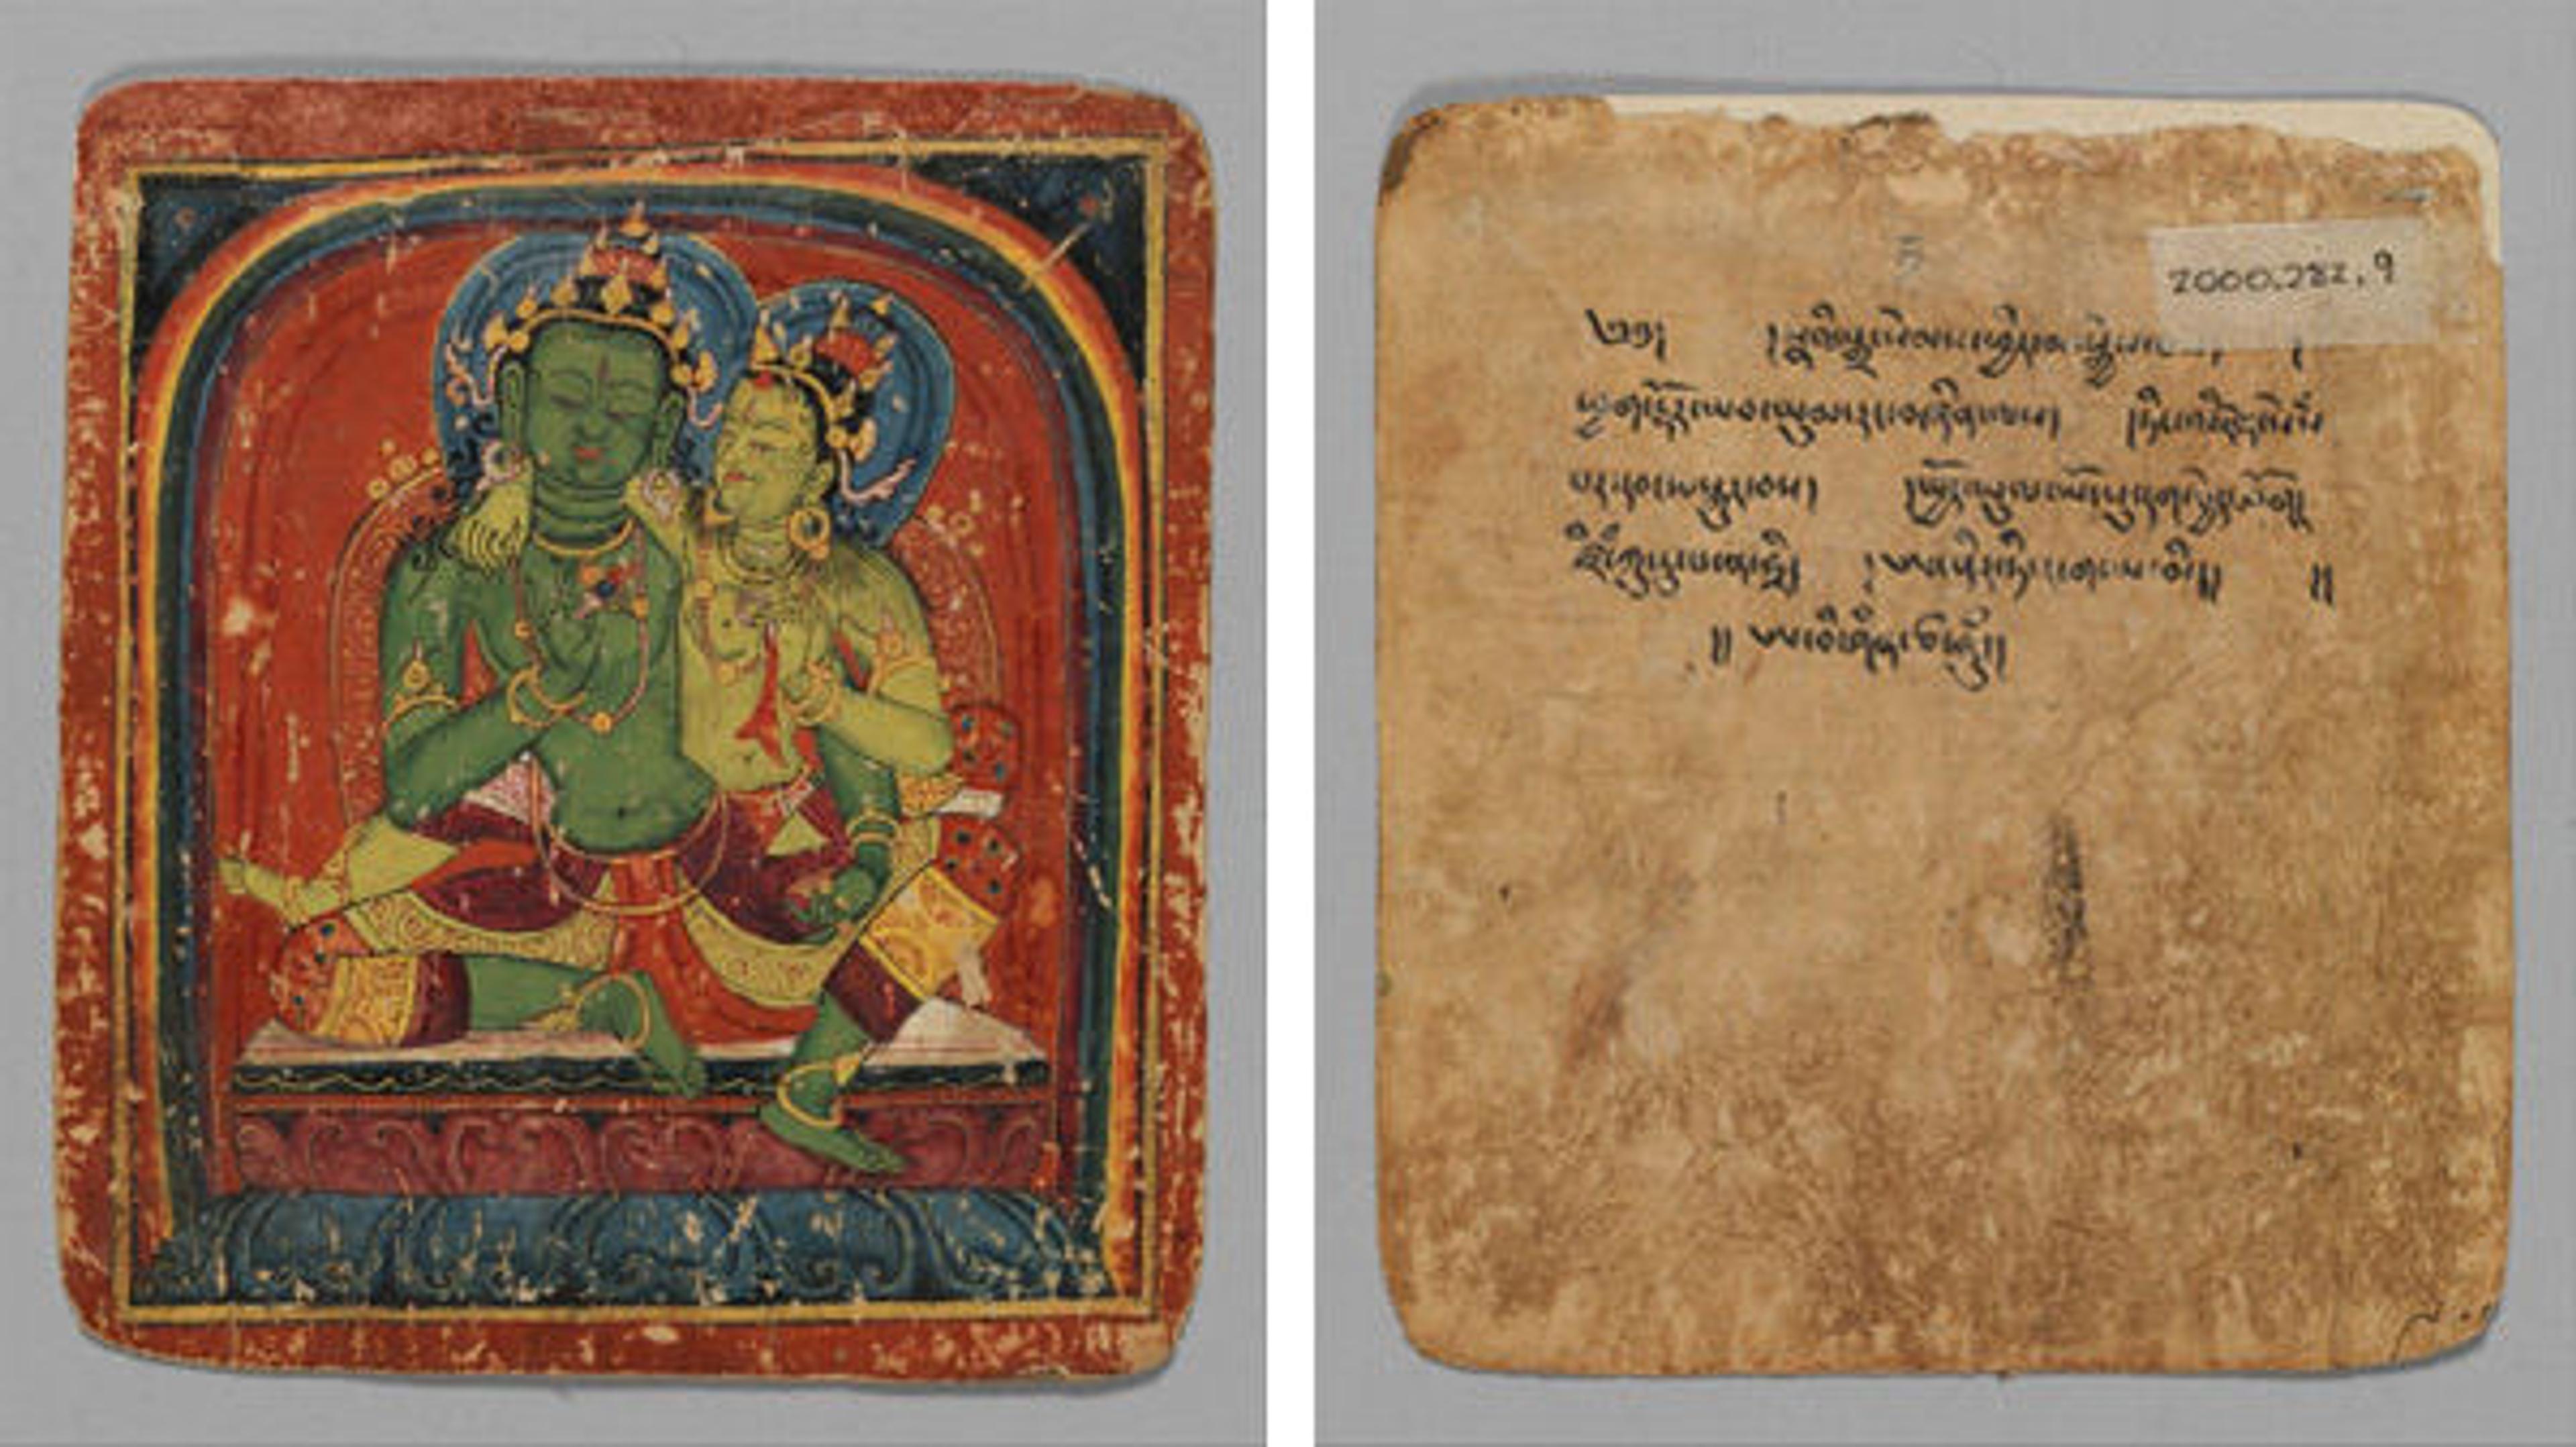 Initiation Card (Tsakalis), early 15th century. Tibet. 2000.282.9